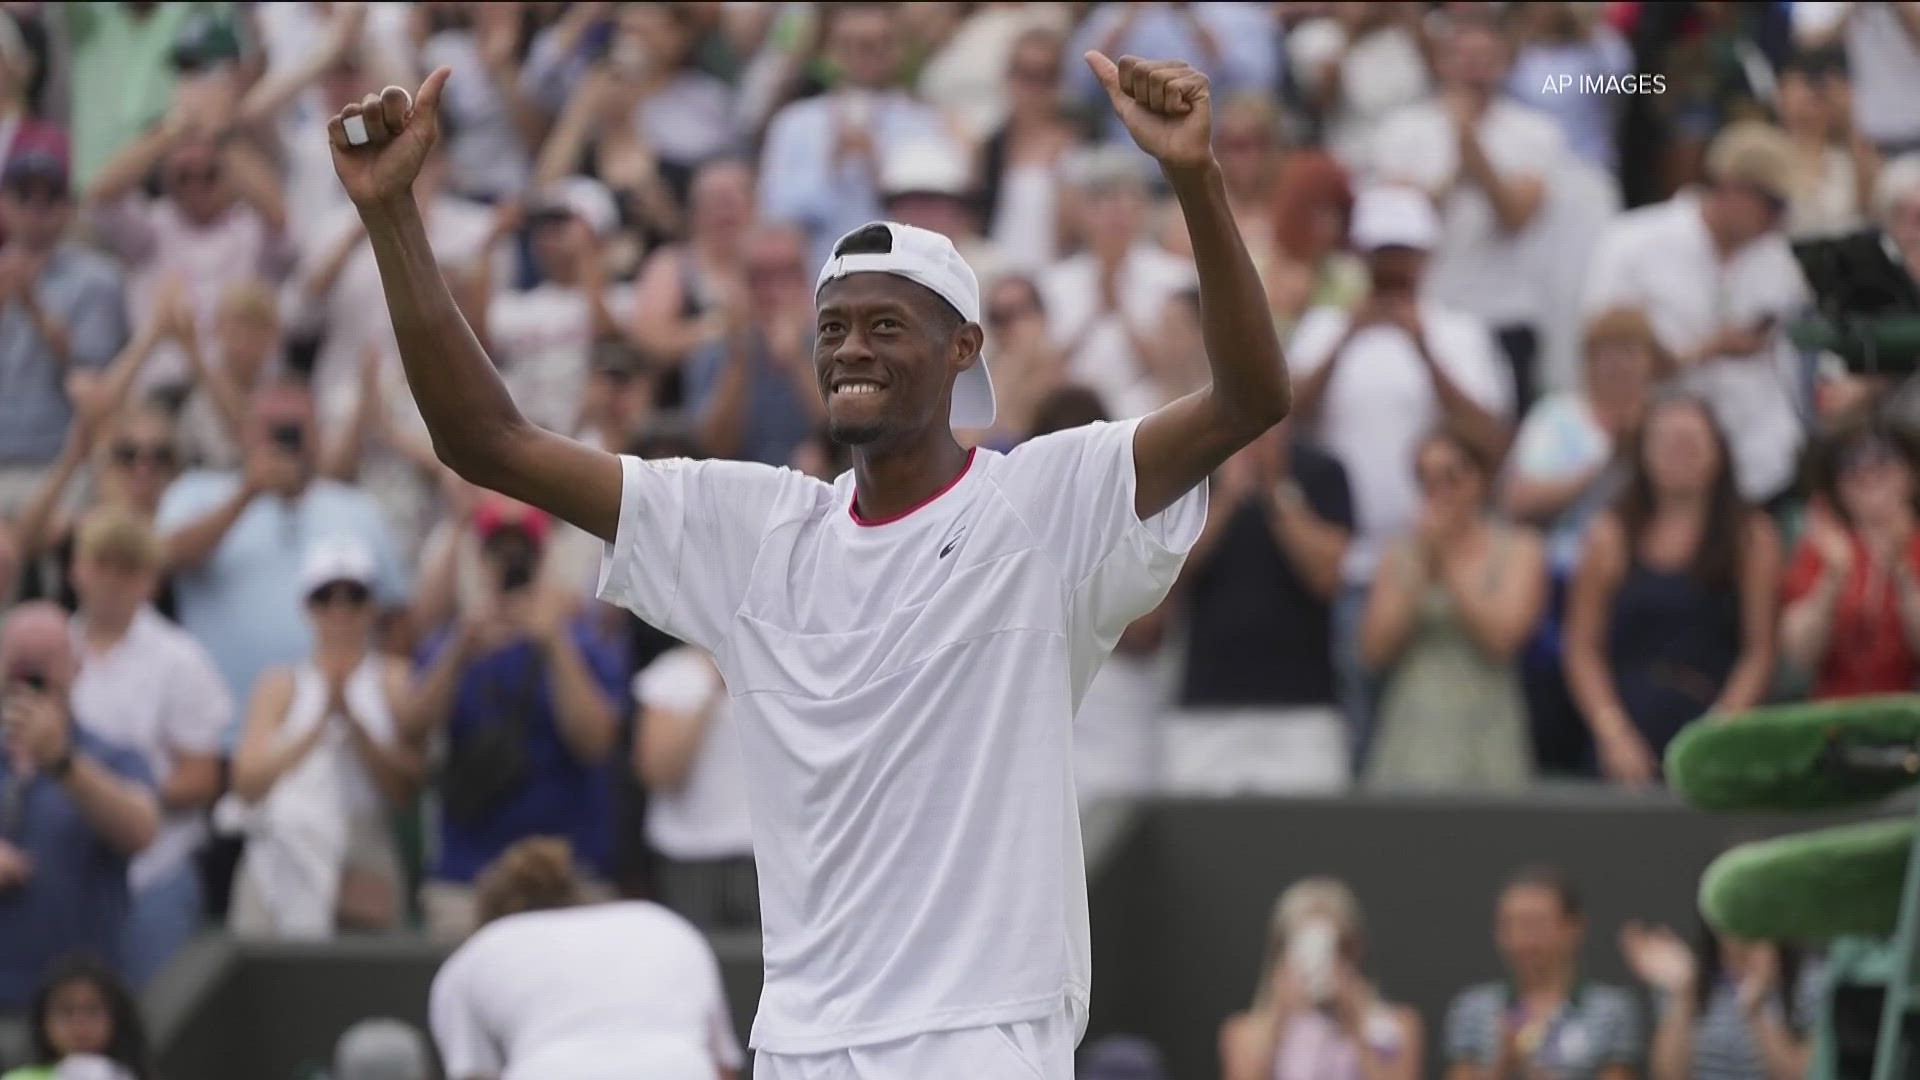 Fans of Georgia Tech tennis star throw watch party as Wimbledon run draws to a close 11alive